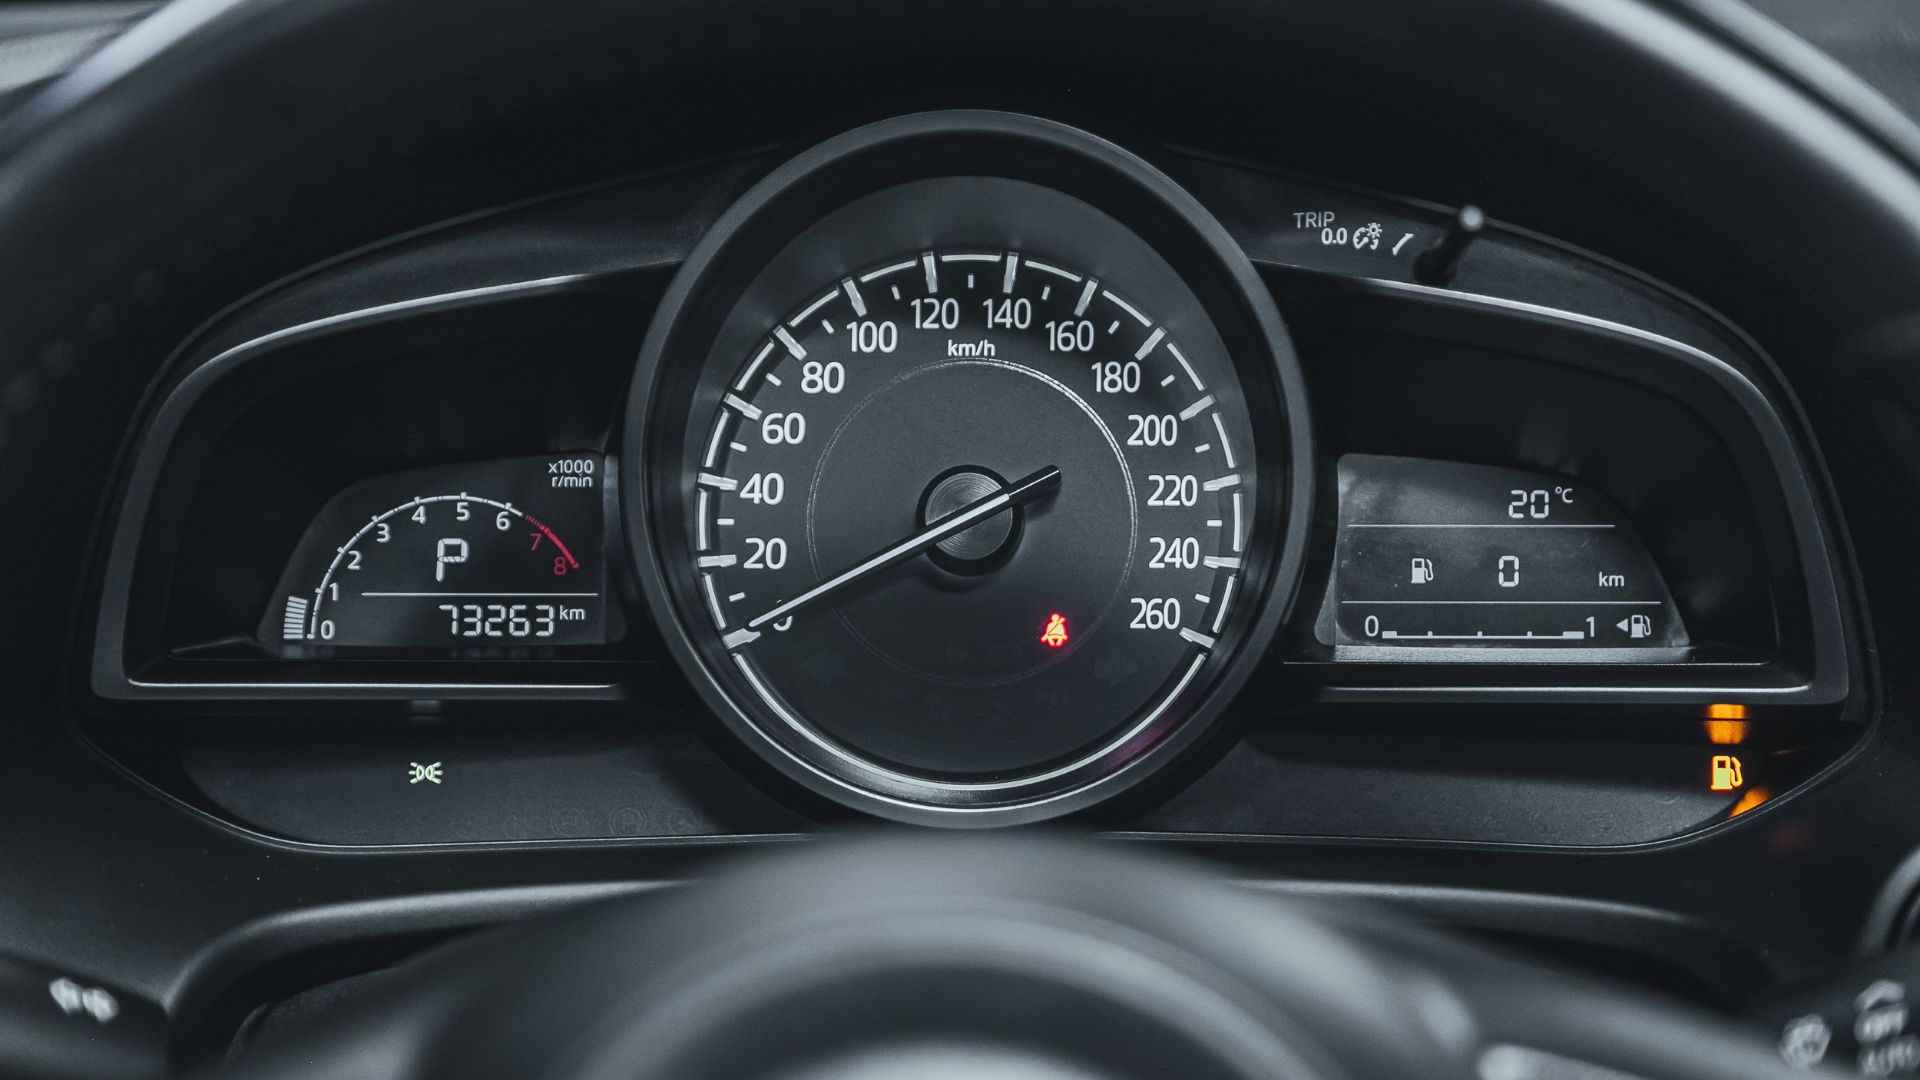 a close up of a speedometer in a car.